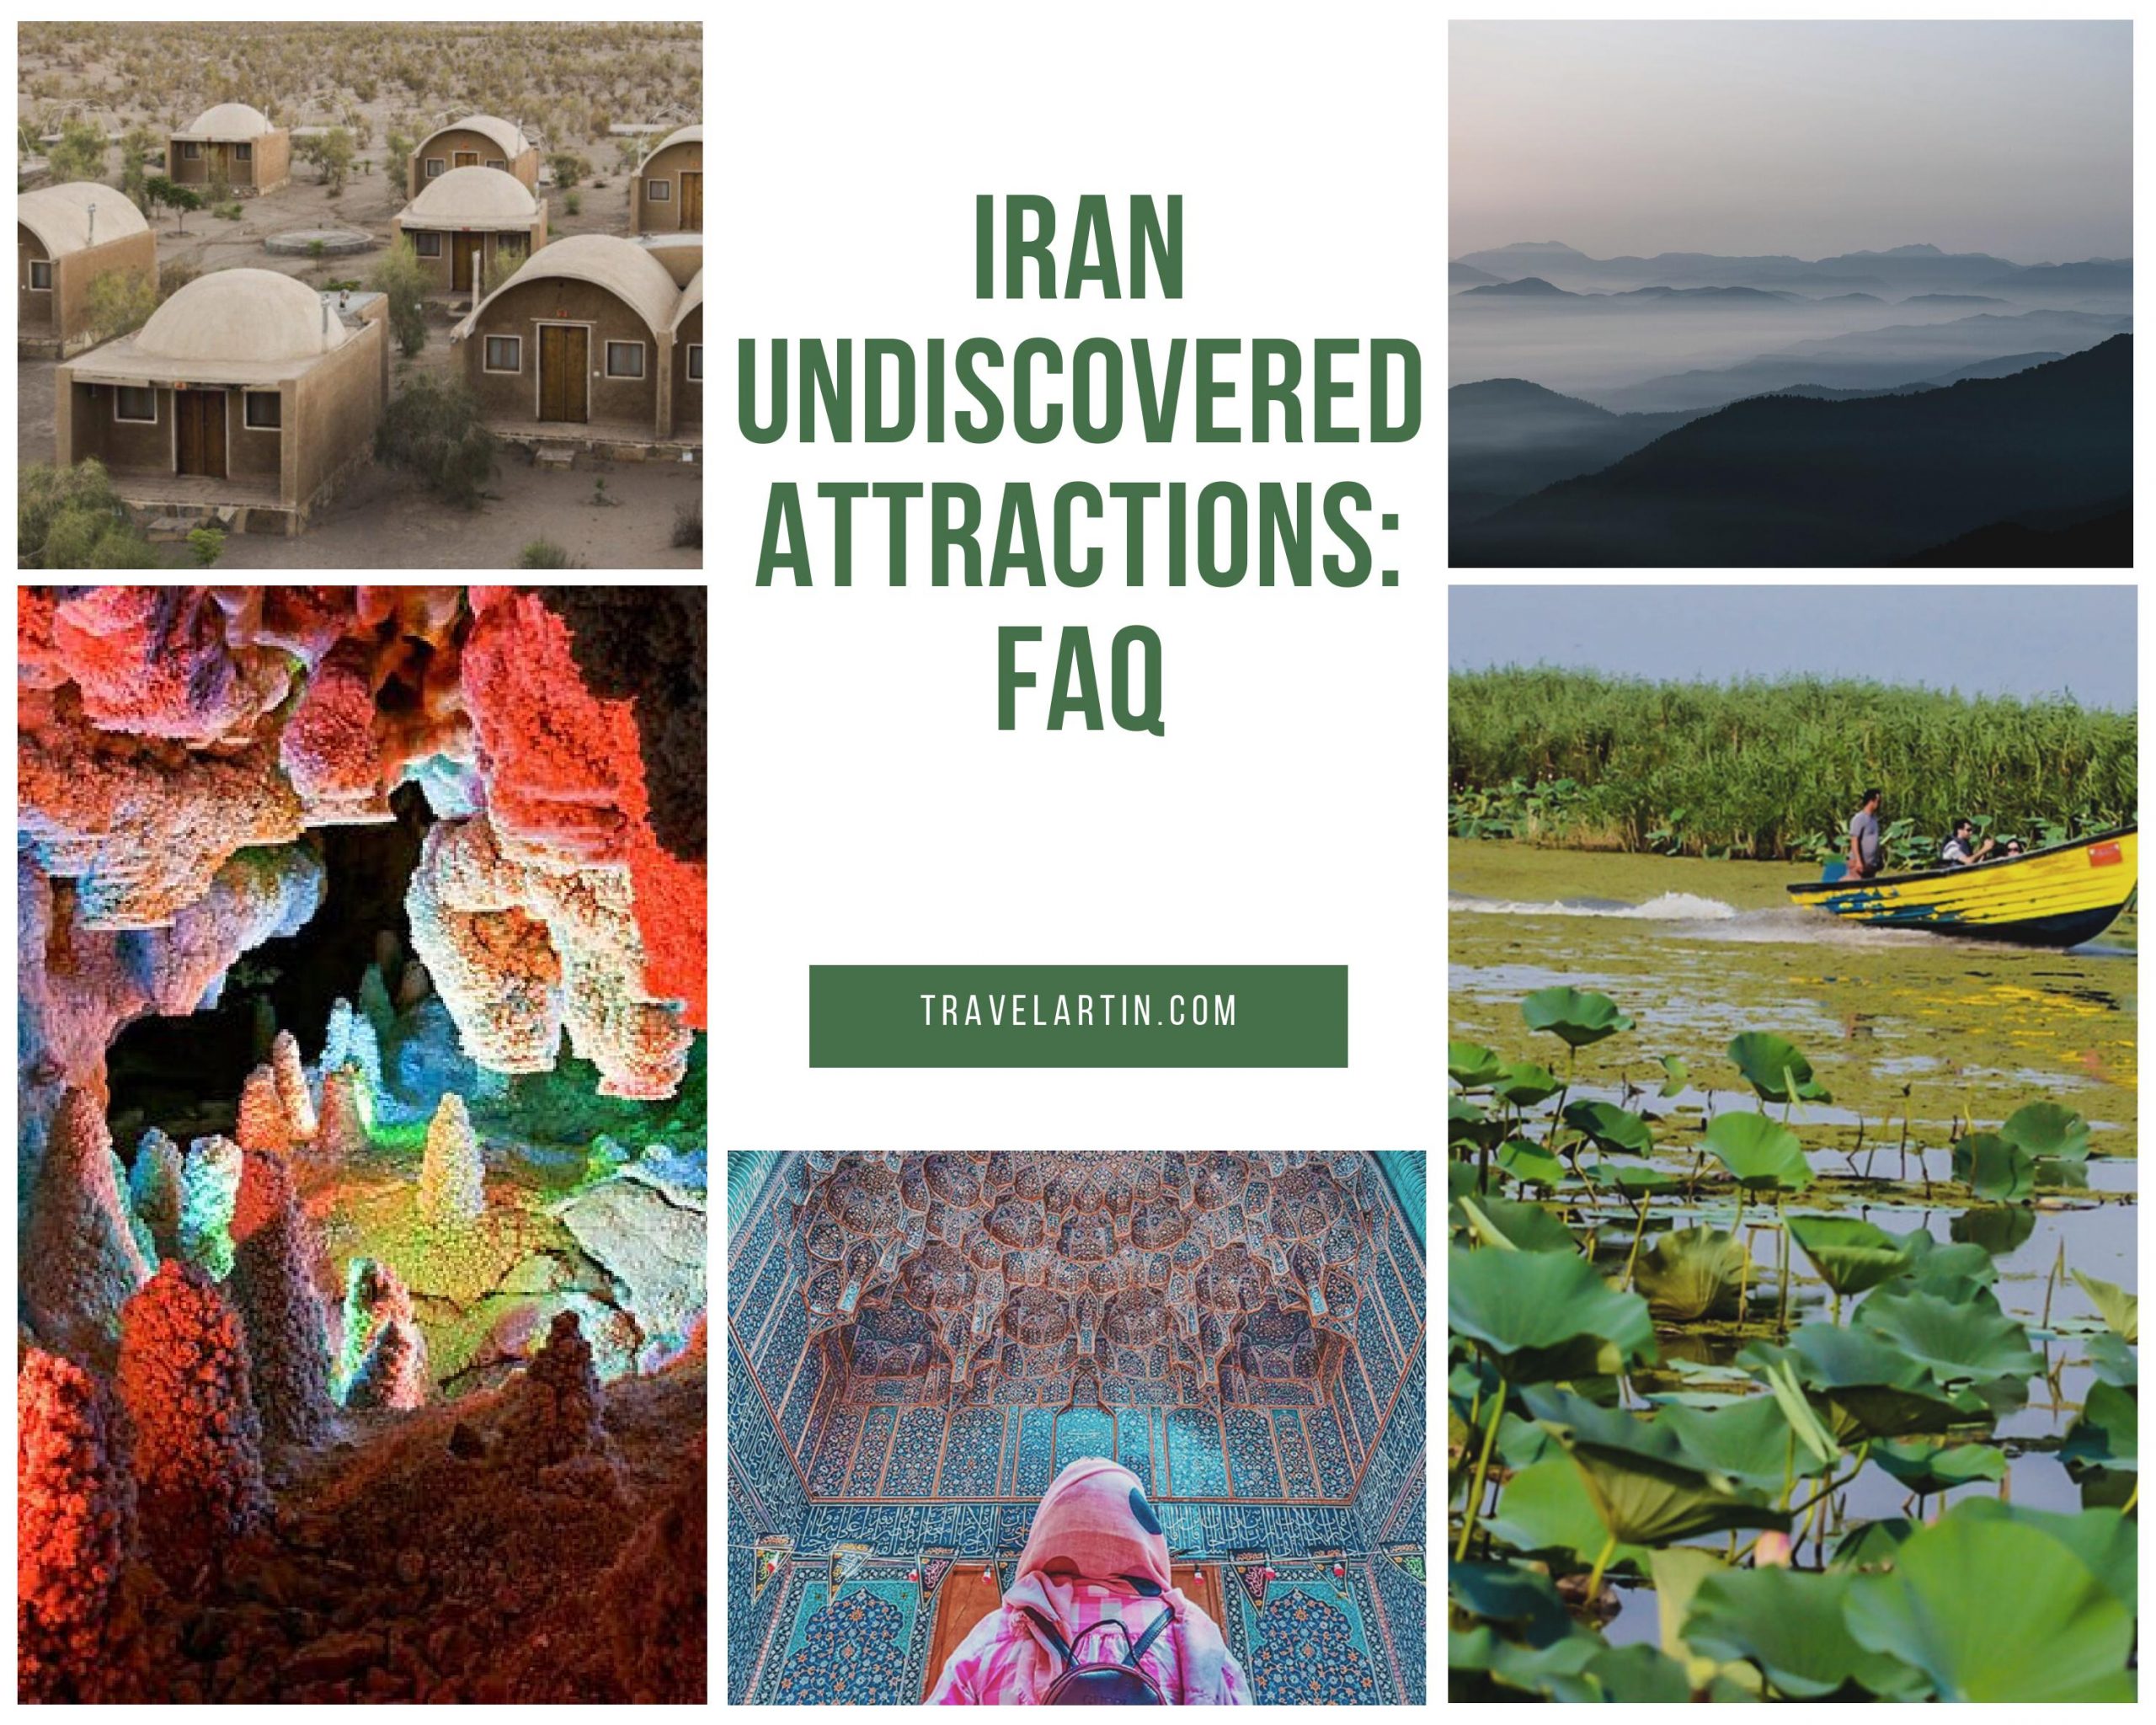 11Iran undiscovered tourist attractions FAQ travelartin.com